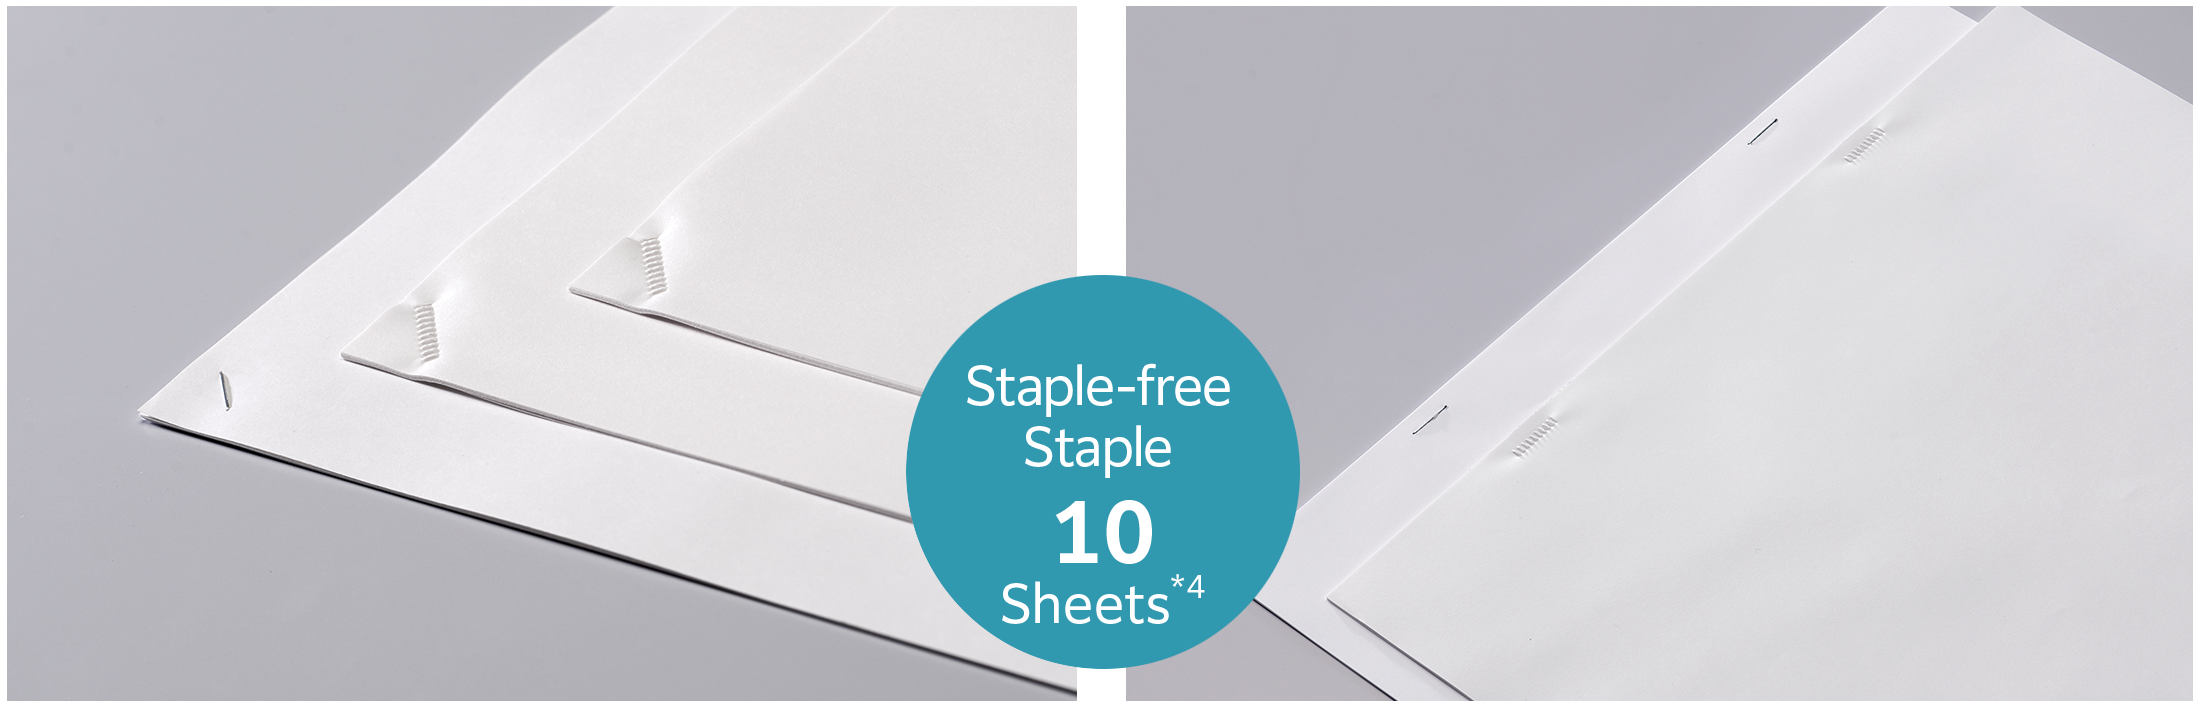 Staple-free Staple 10 Sheets